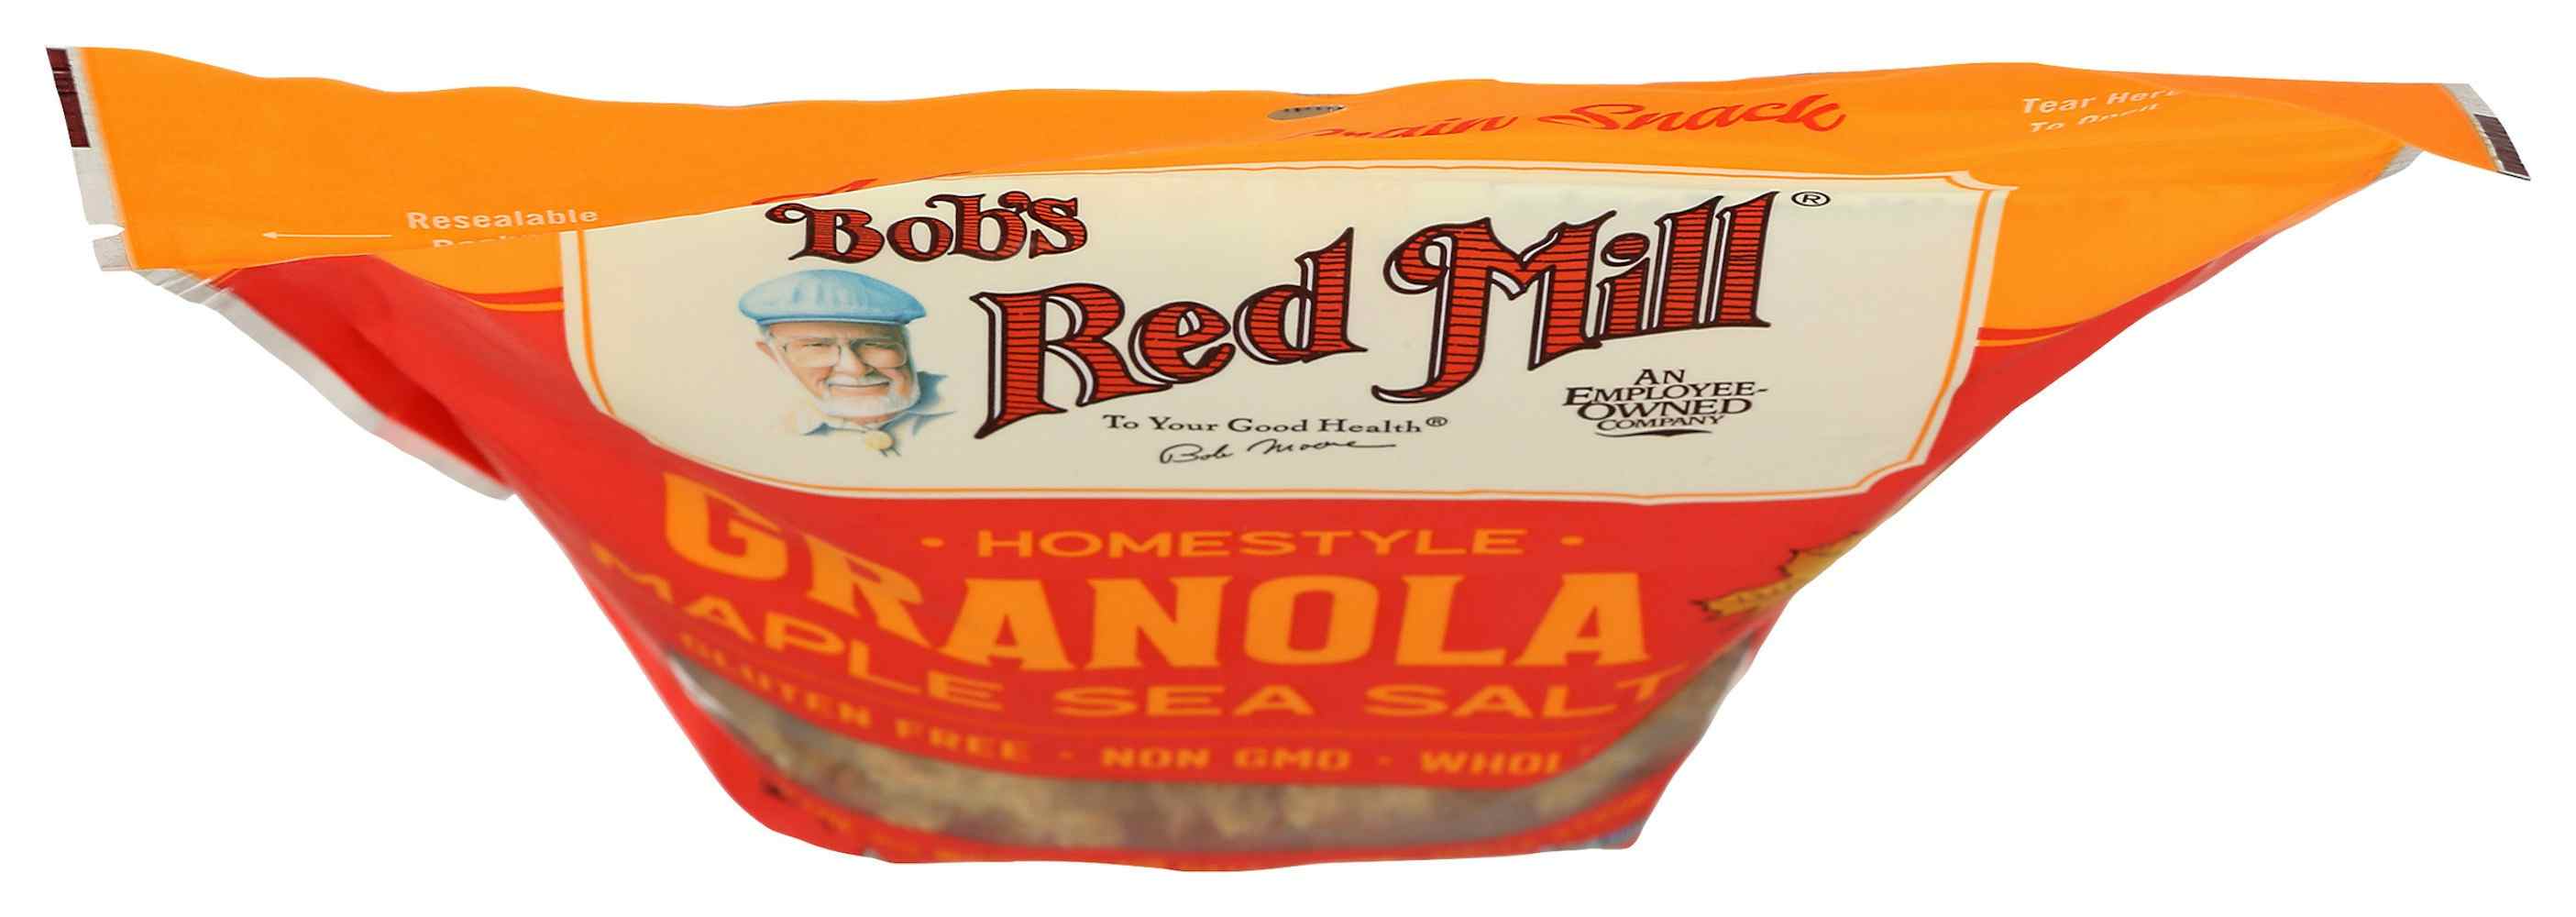 Bob's Red Mill Maple Sea Salt Homestyle Granola